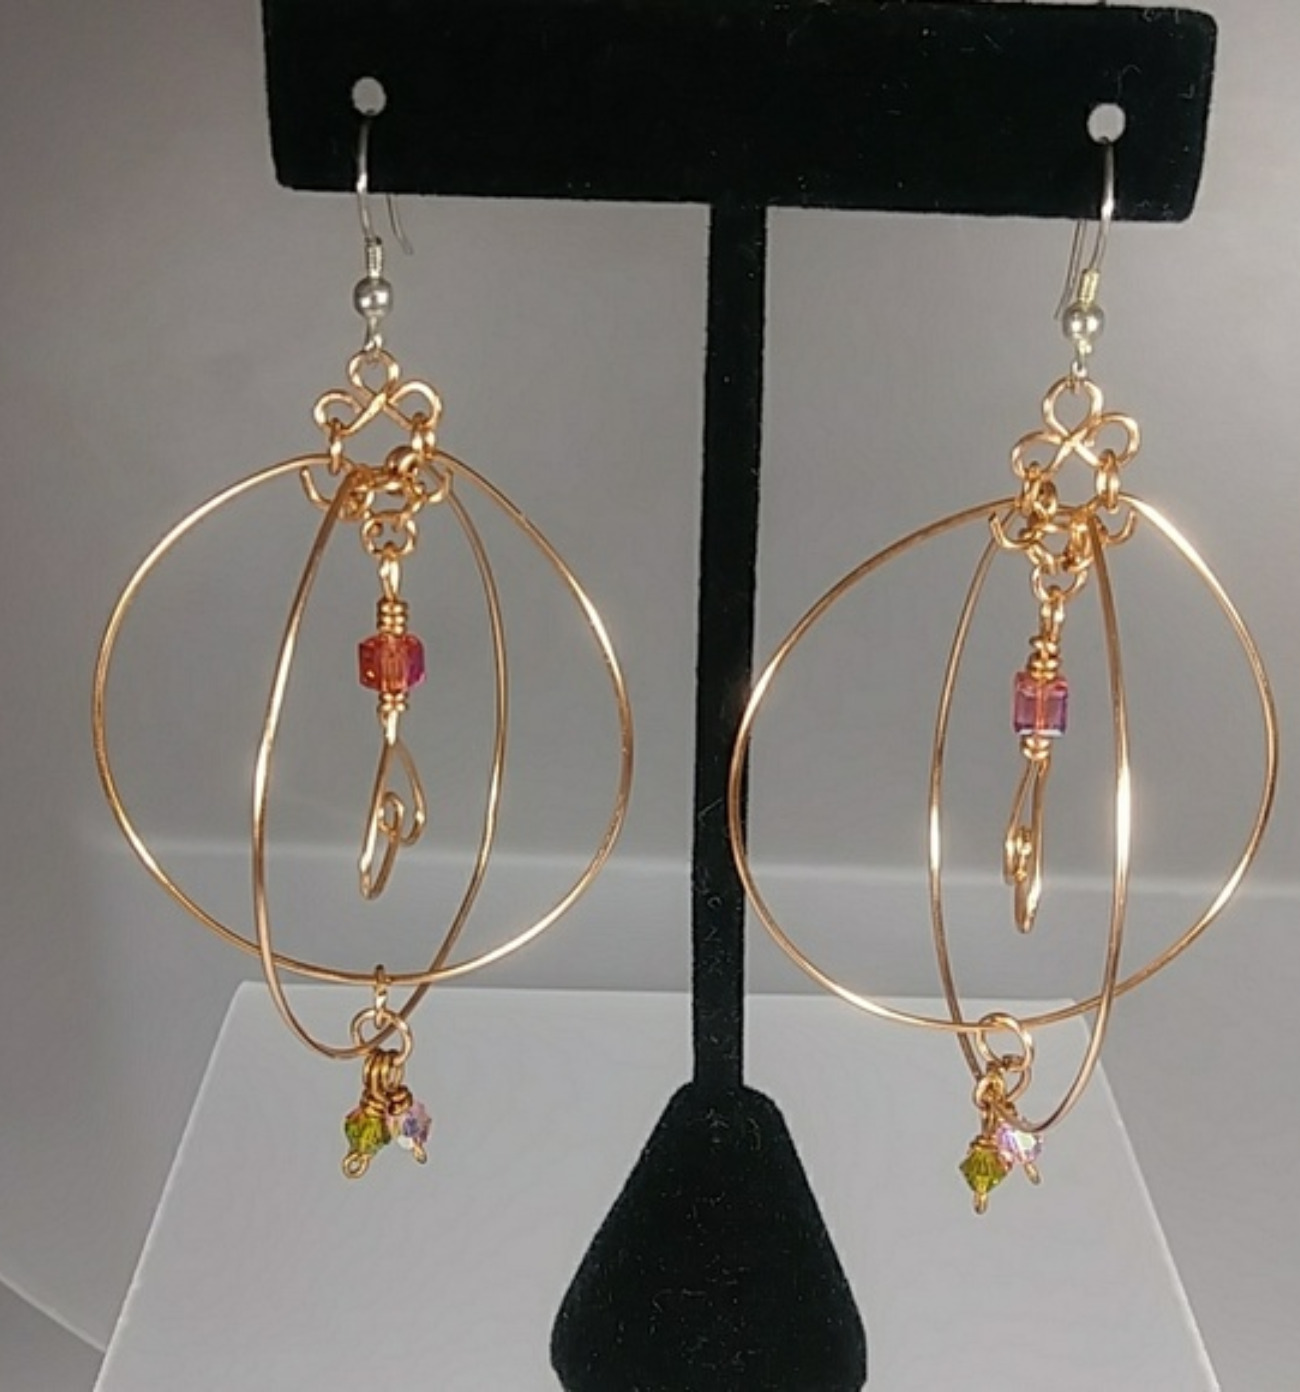 601 - EAR - Description: Earrings: Copper Wire, Swarovski Crystal Beads, 3 1/2” (inches/Length) 2 ” (inches/Width) Sterling Silver Fishhook Earwire